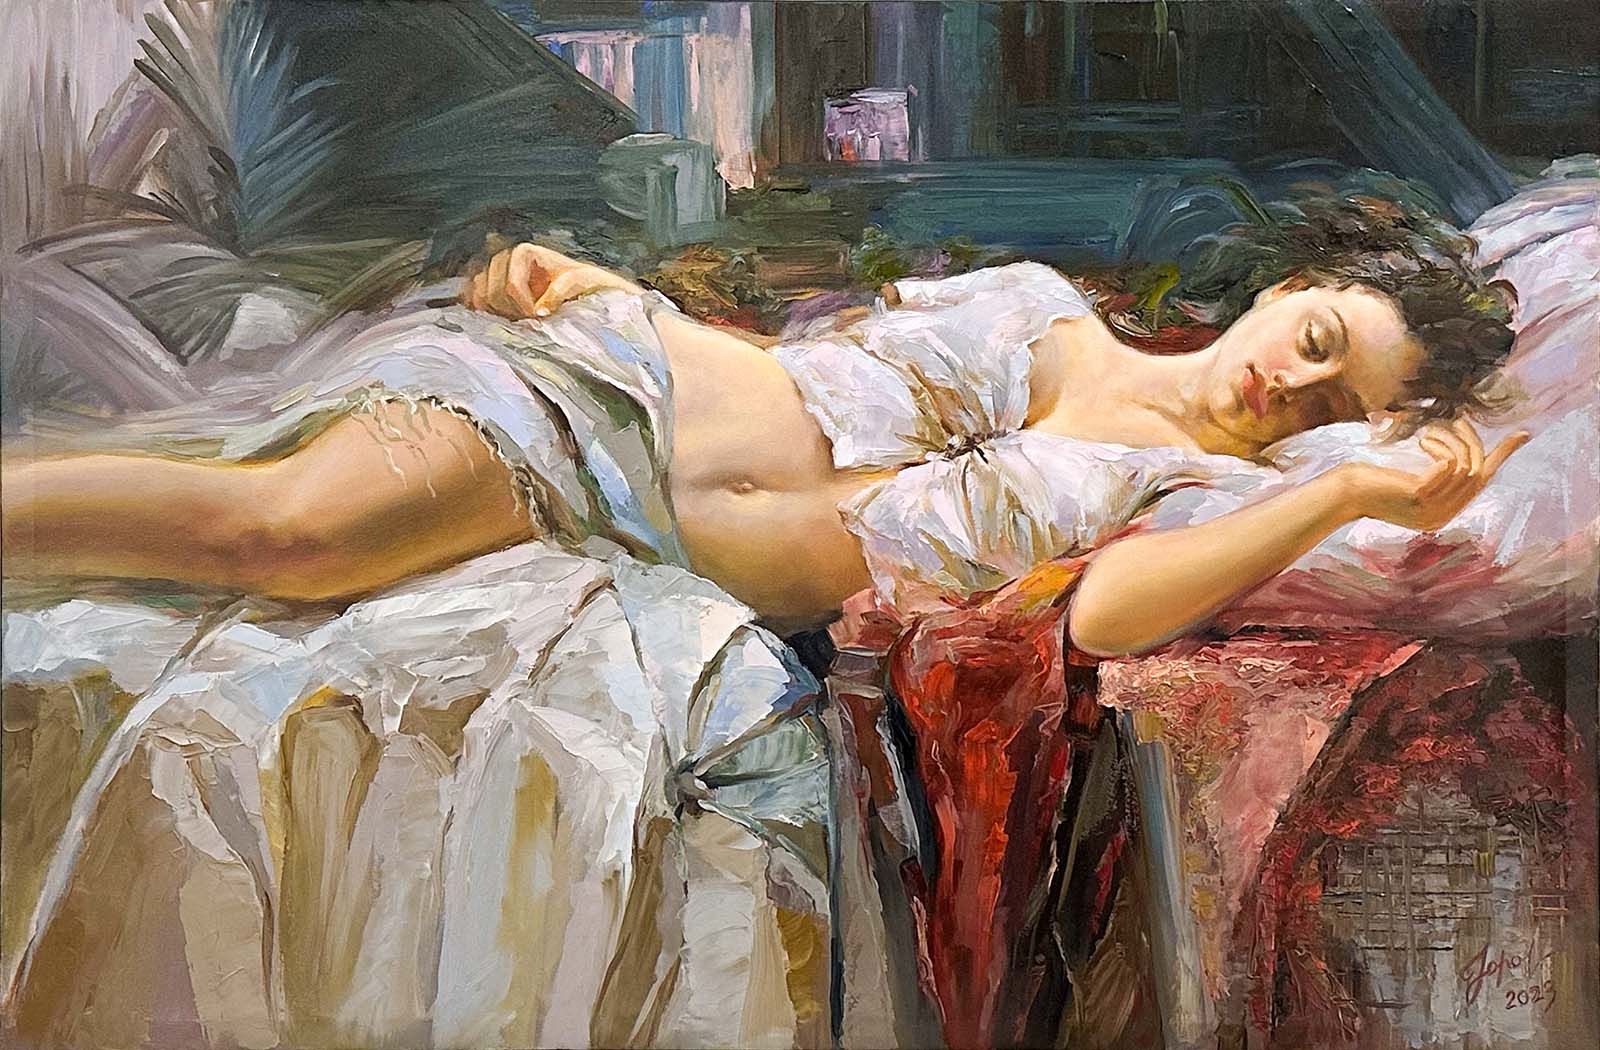 Contemporary Art. Title: Sleeping Beauty-Oil on Canvas-24 x 36 in by artist Mykola Yurov.